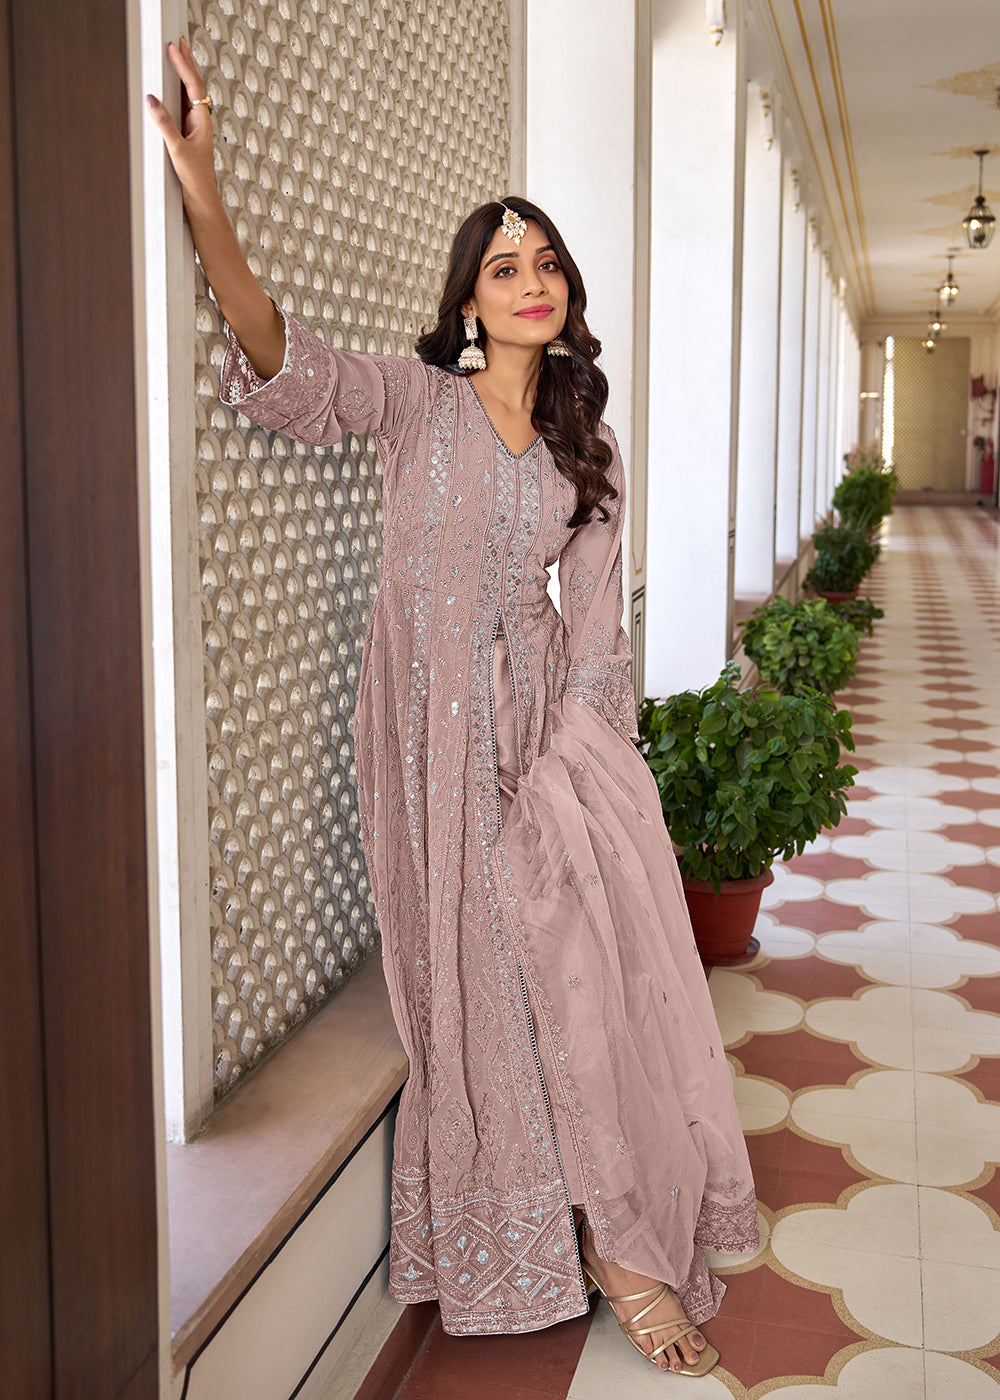 Buy Now Slit Style Pink Embroidered Wedding Festive Anarkali Suit Online in USA, UK, Australia, New Zealand, Canada & Worldwide at Empress Clothing.